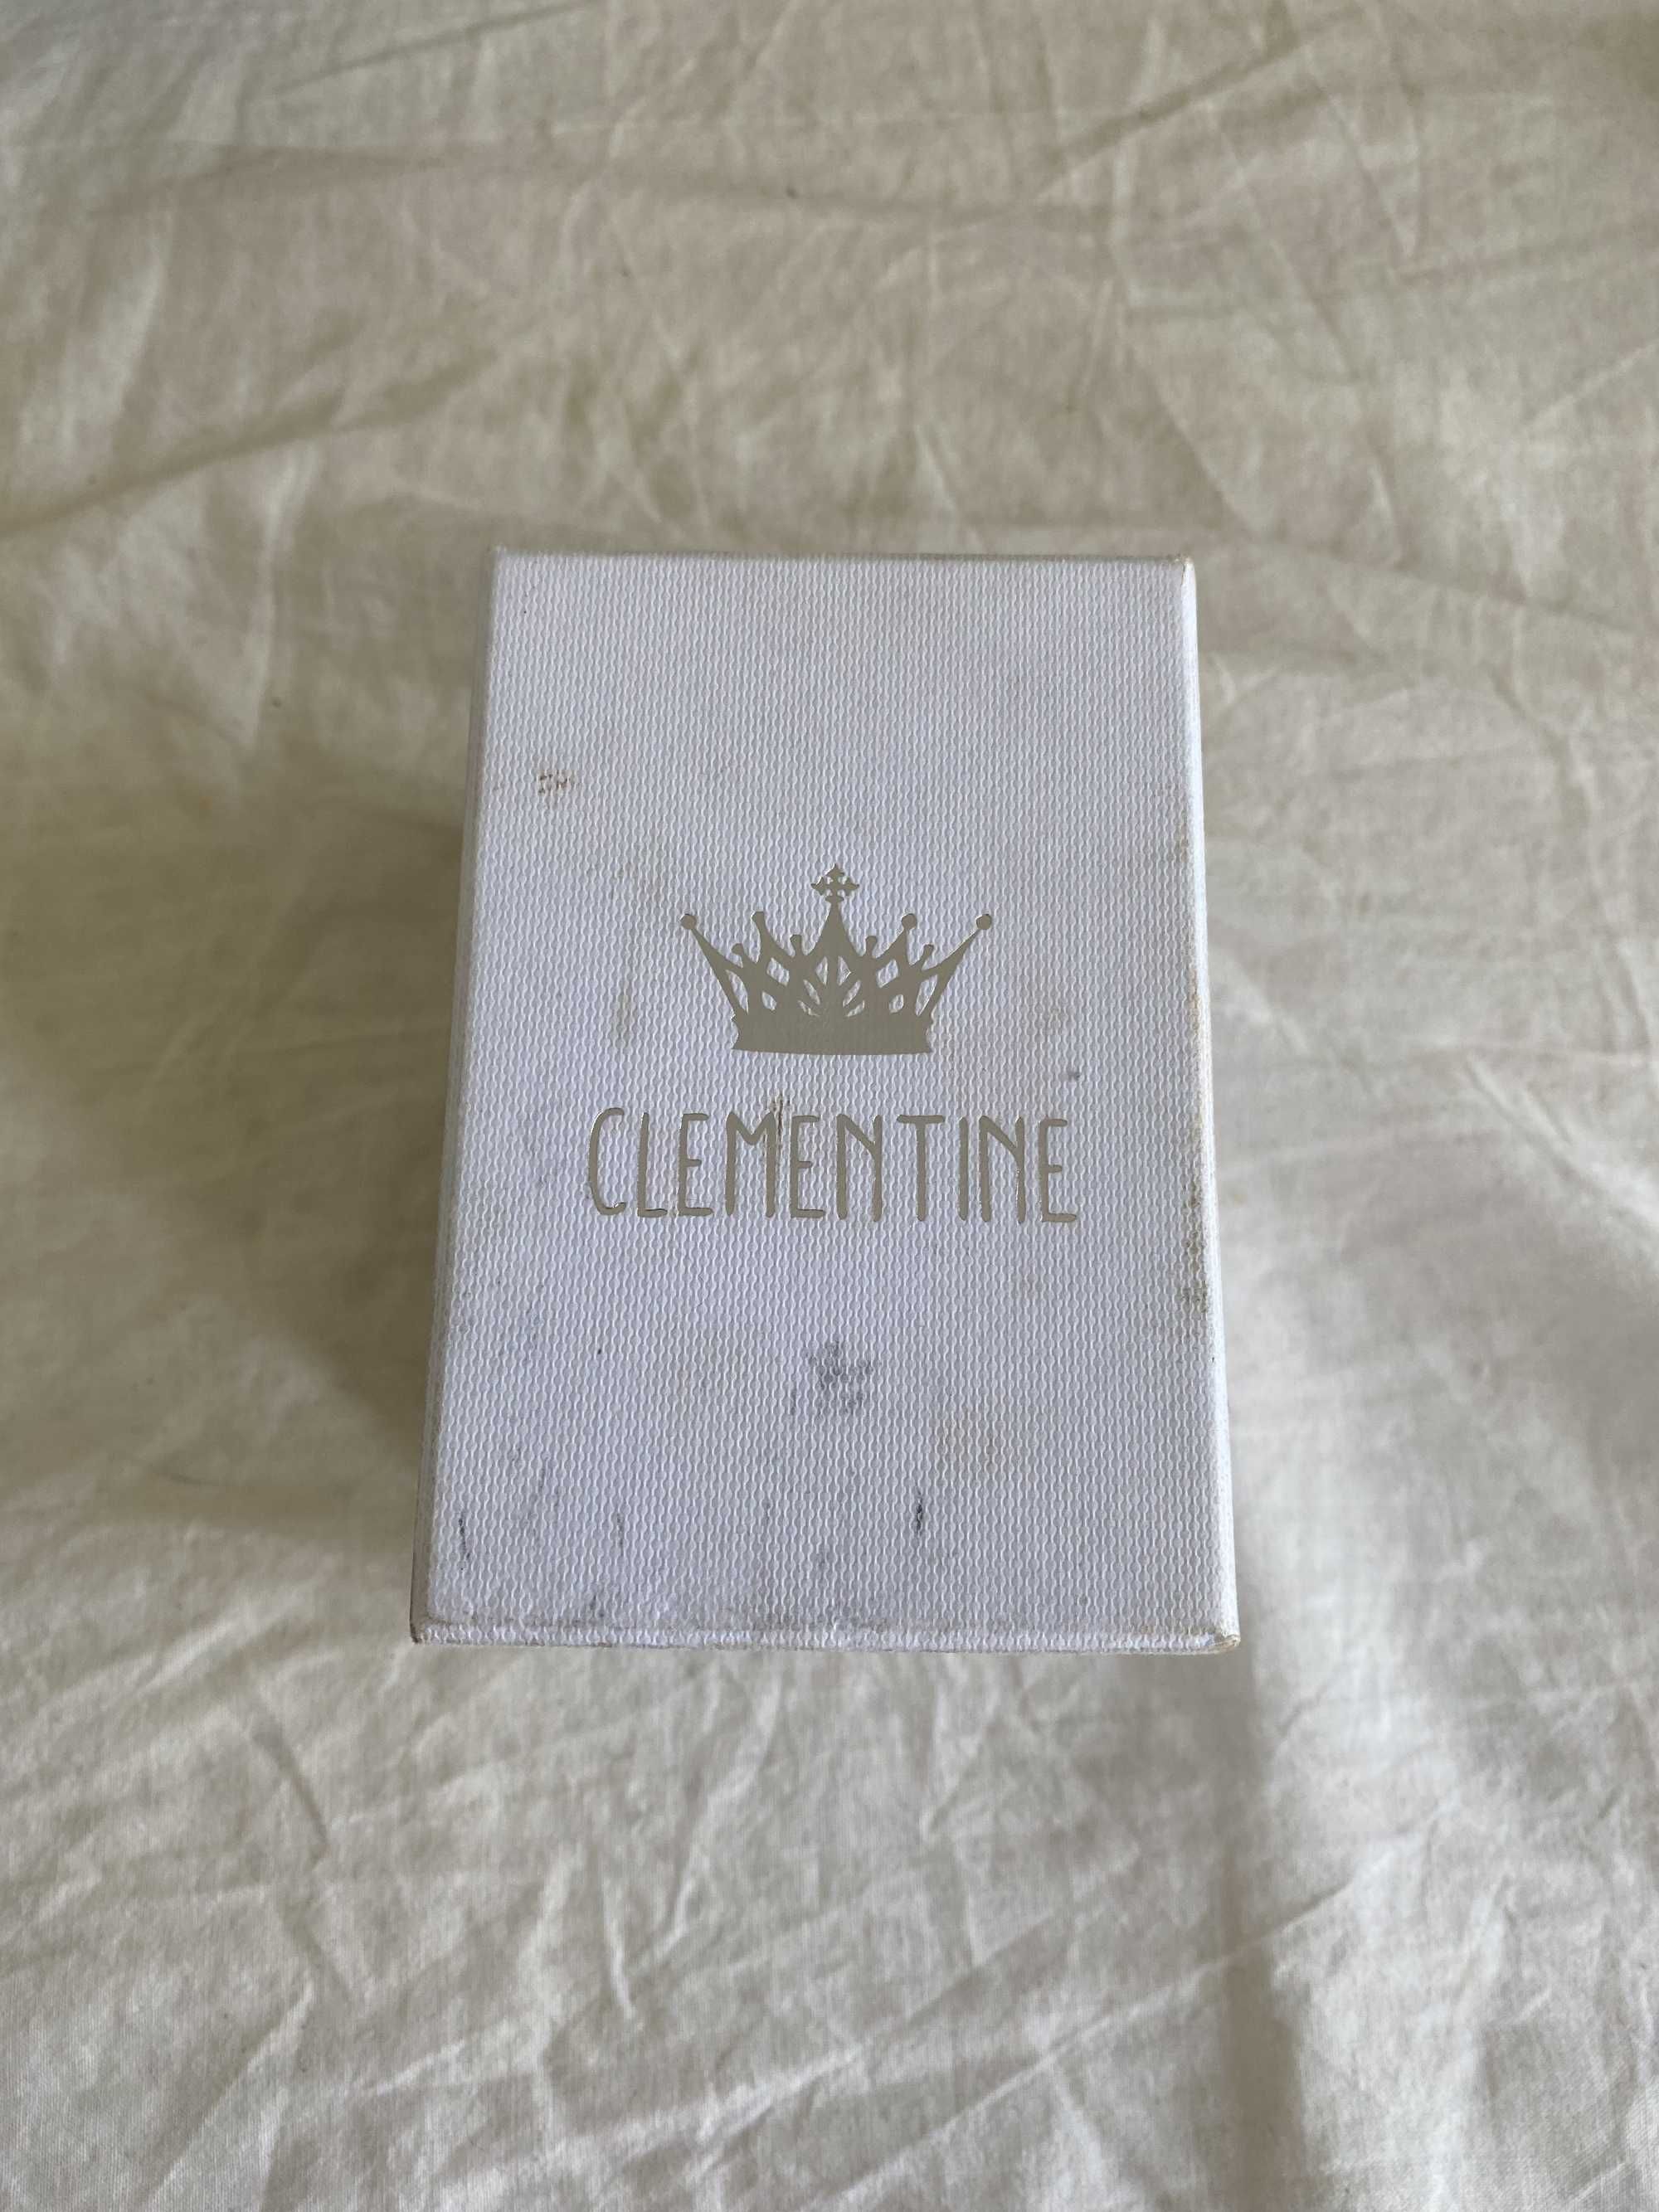 Zegarek Clementine damski